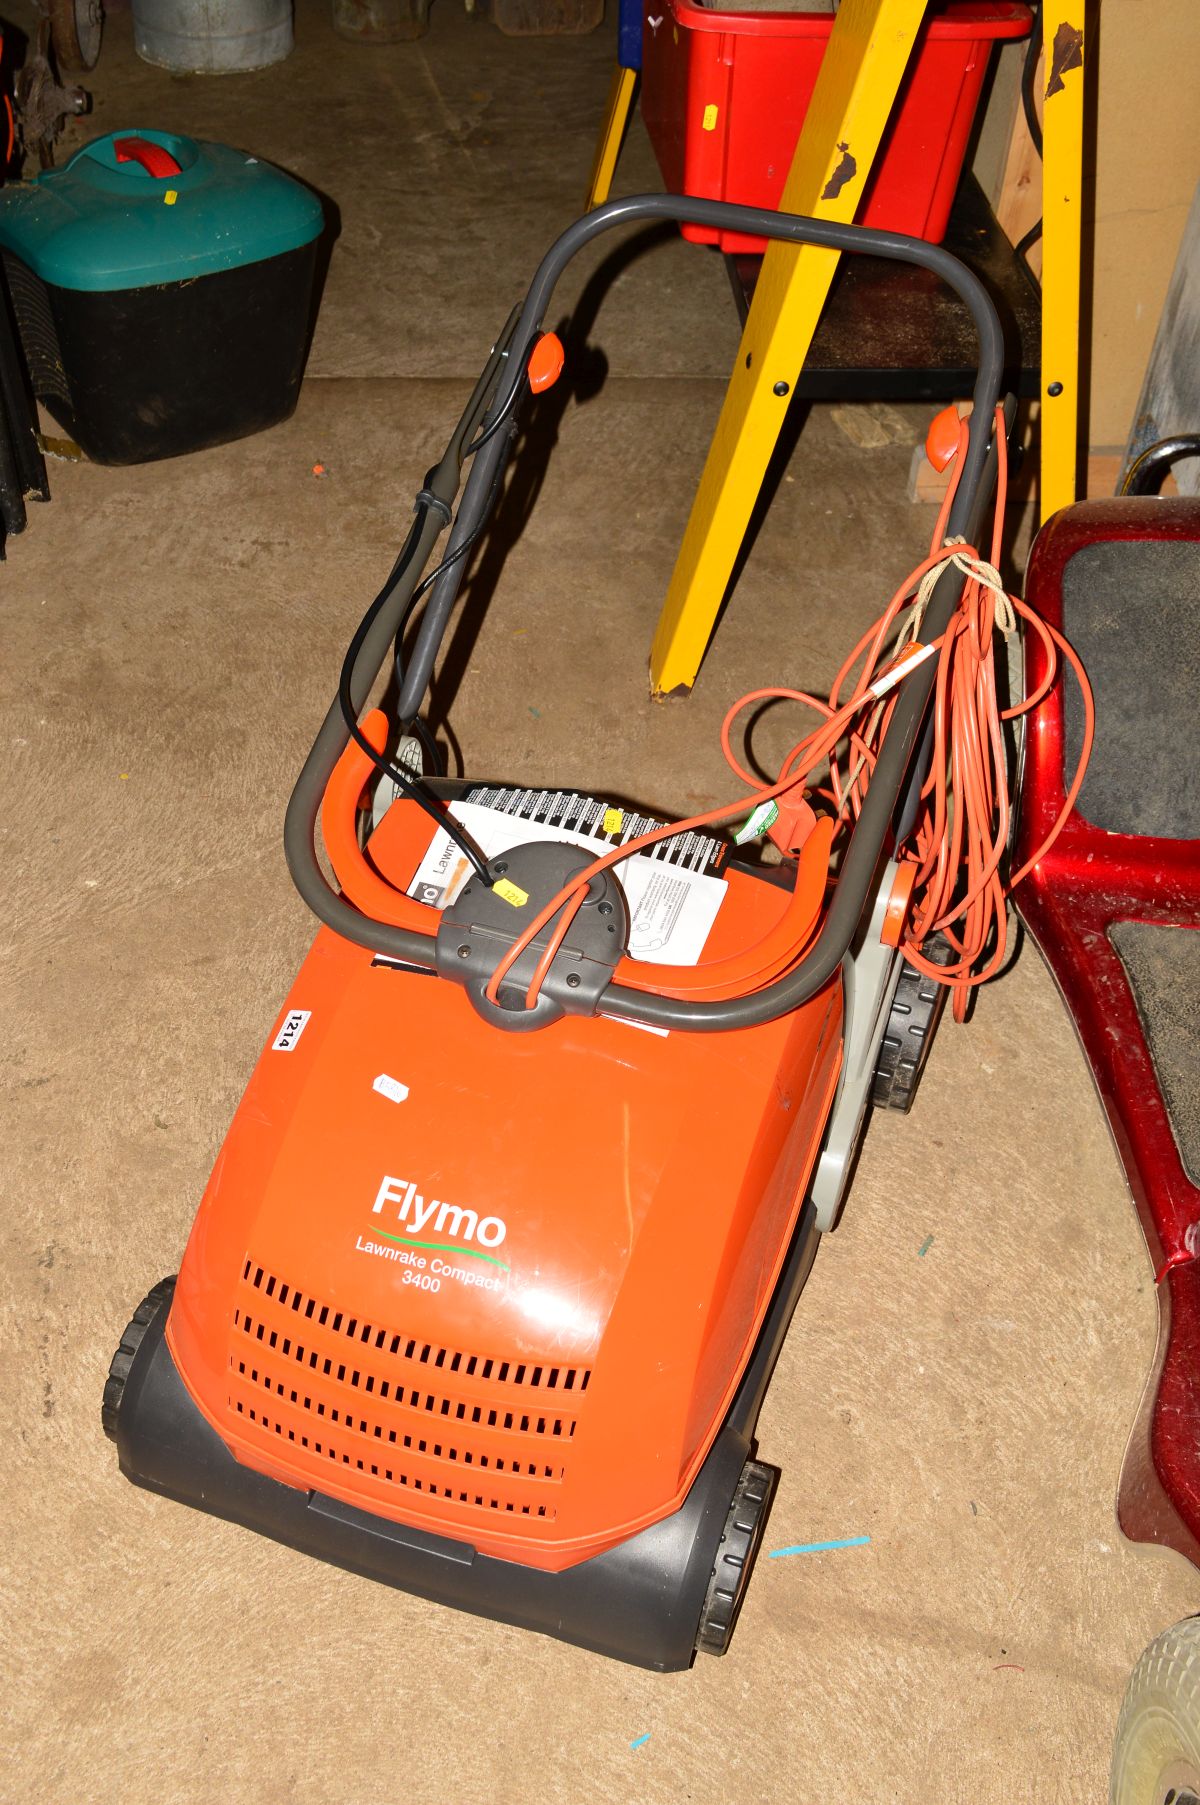 A FLYMO COMPACT 3400 ELECTRIC LAWN RAKE